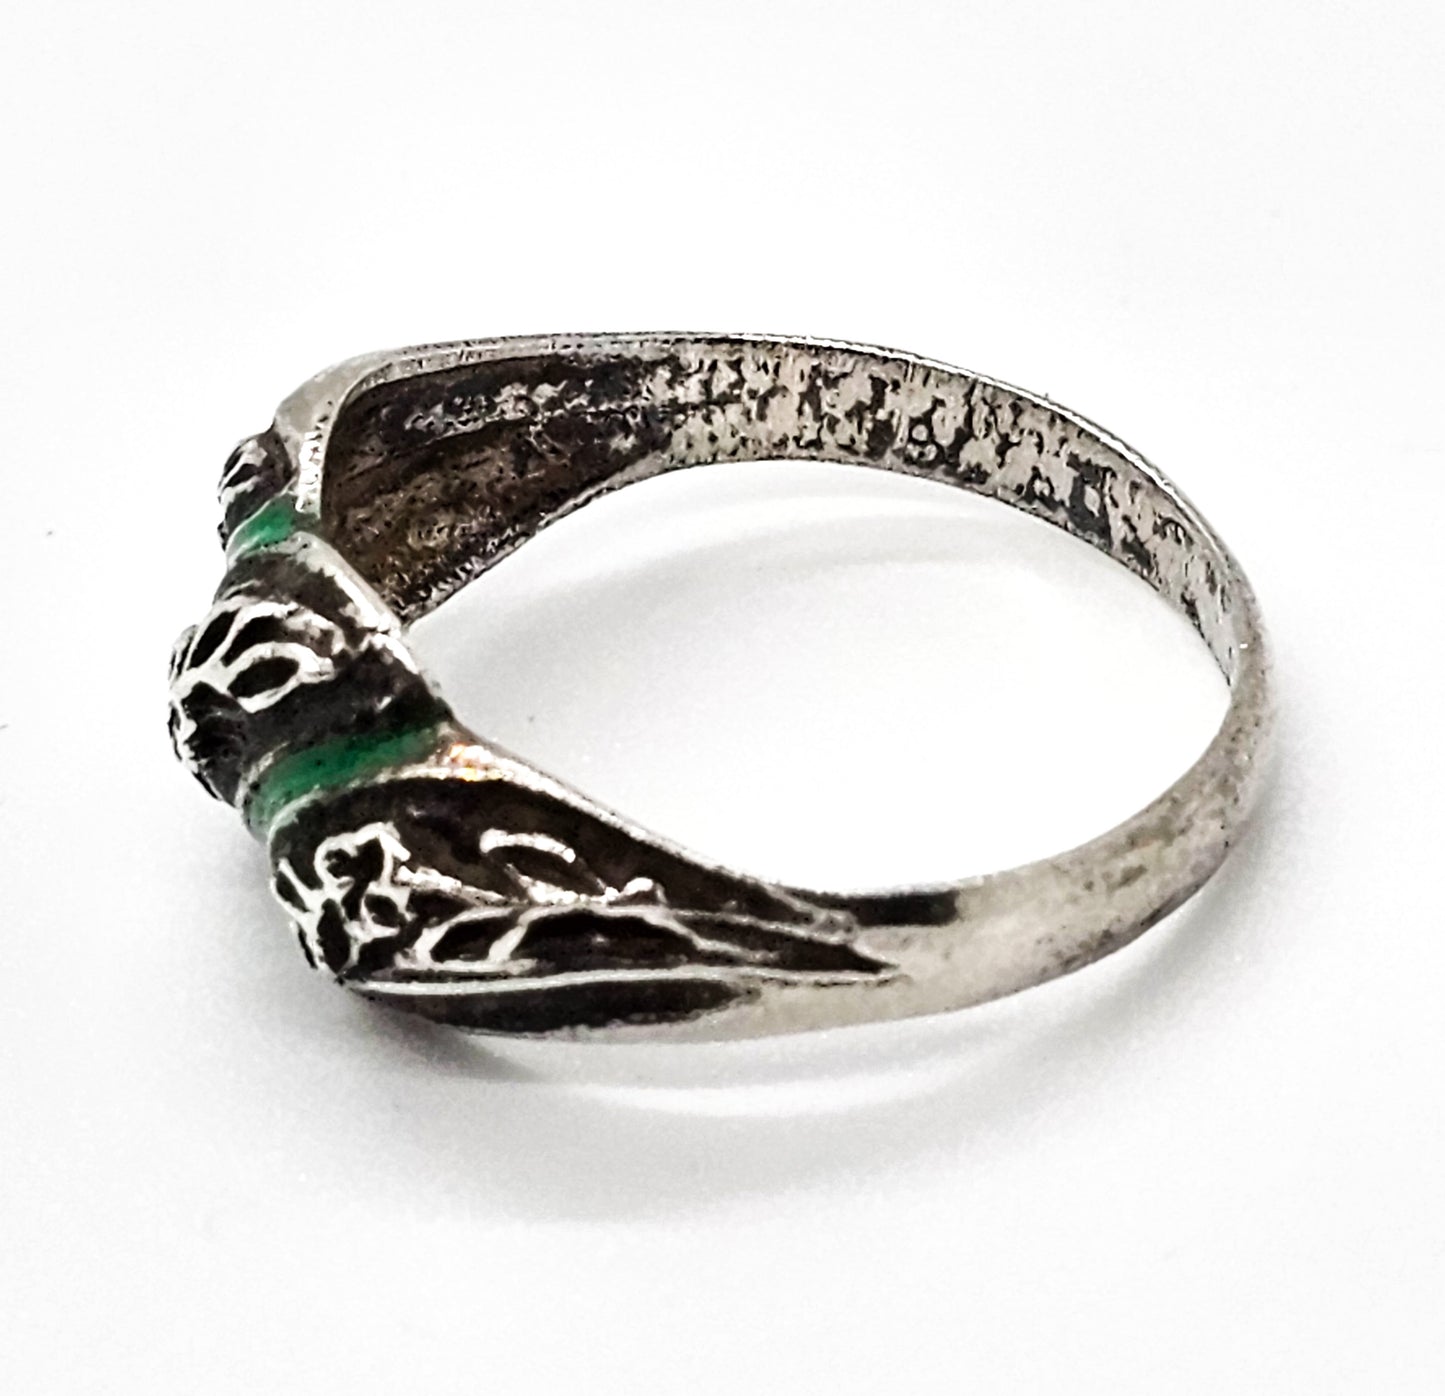 Art Nouveau Repousse  Forget me knot green enamel antique sterling silver ring size 8